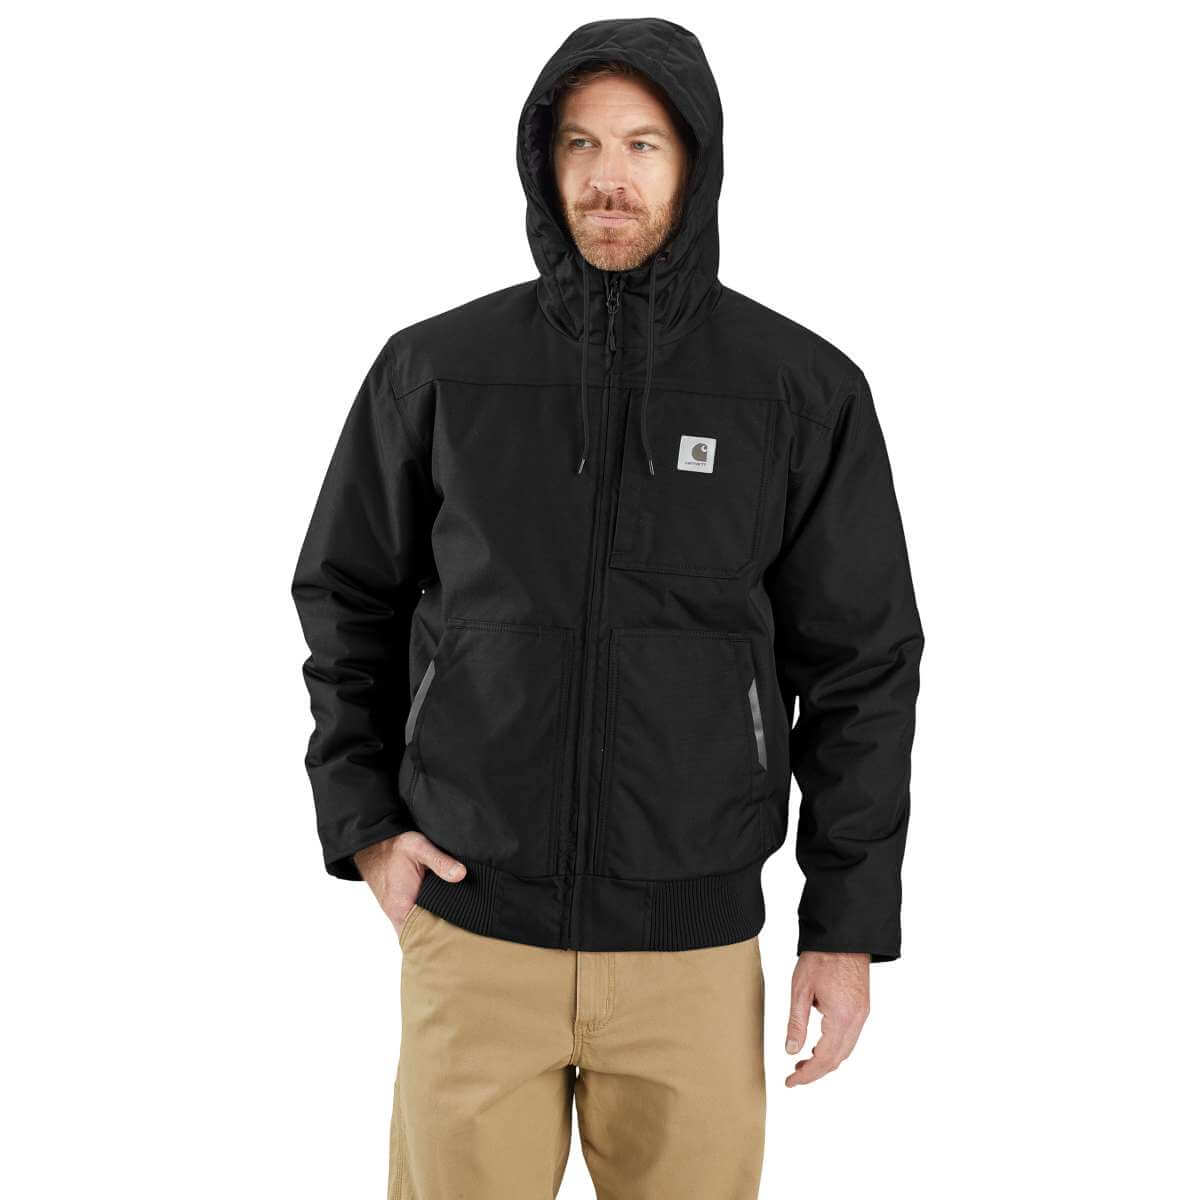 104458 - Carhartt Men's Yukon Extremes Insulated Active Jacket